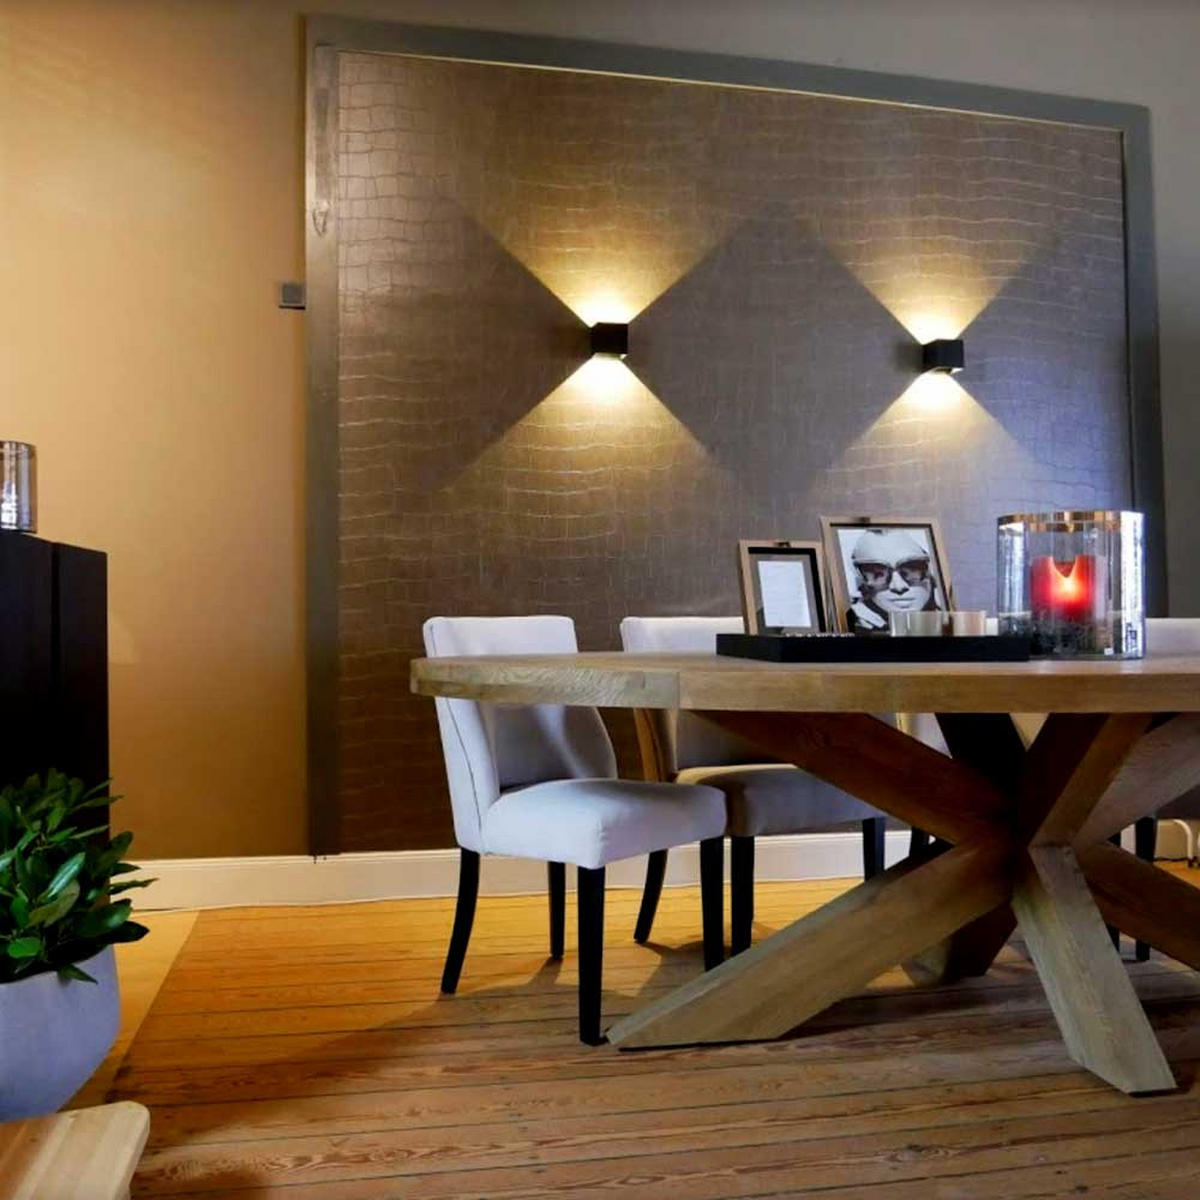 online Ixa jetzt s.luce Quadratisch Holz nur LED-WANDLAMPE ➤